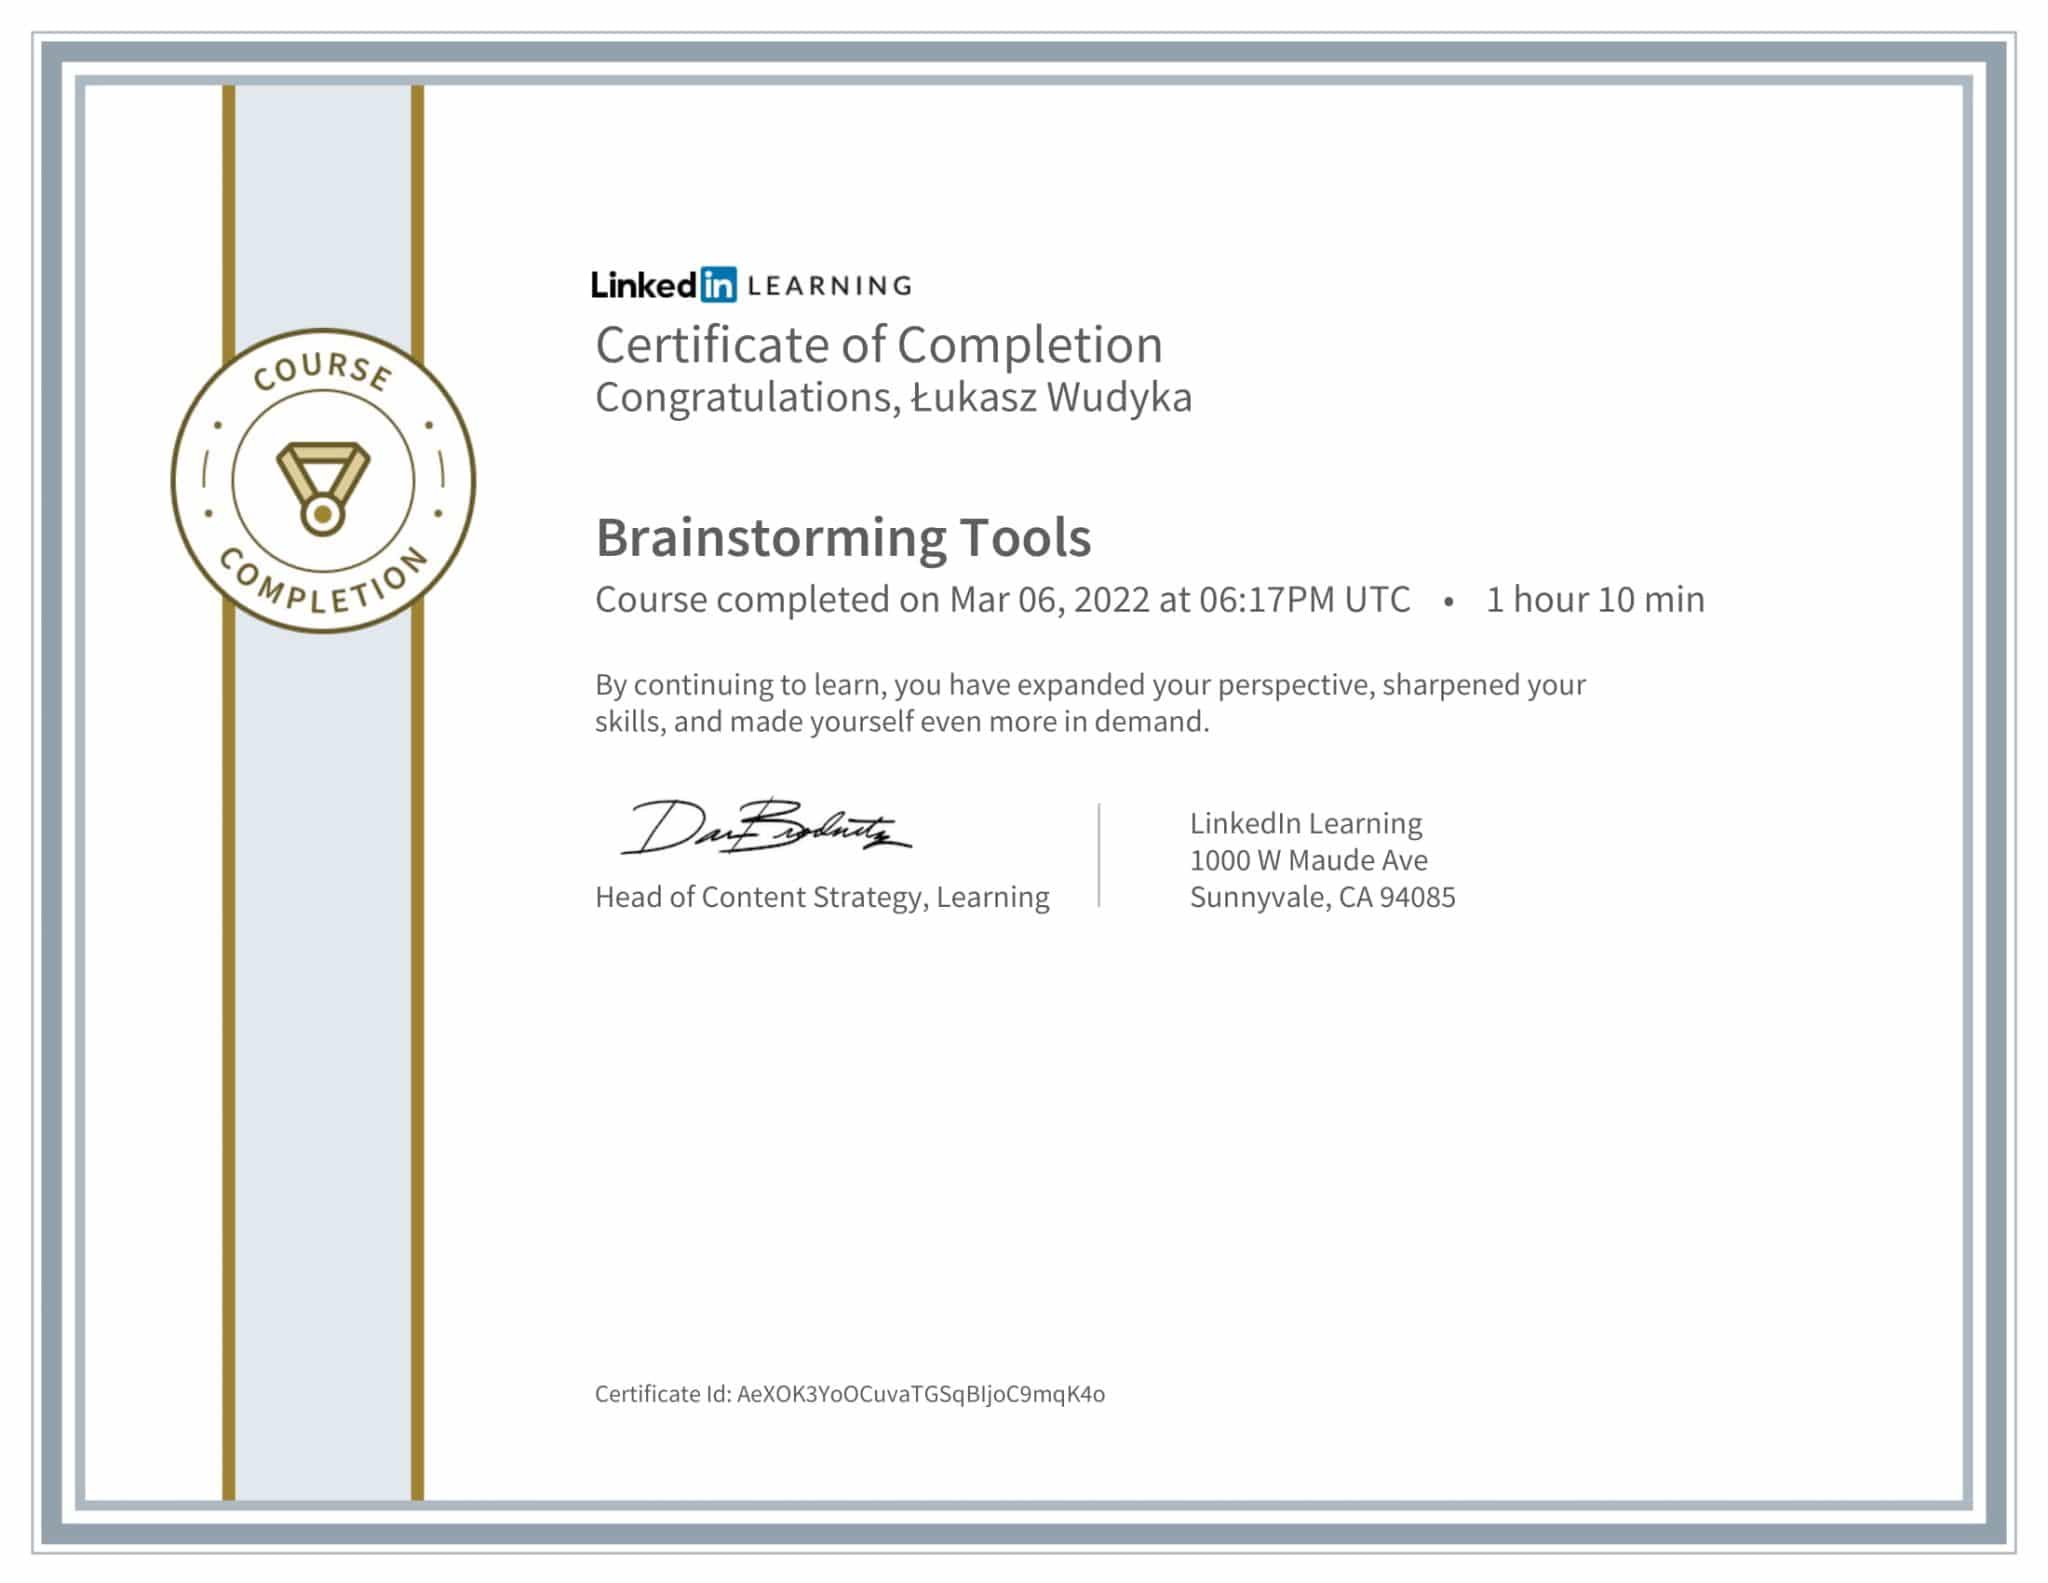 CertificateOfCompletion_Brainstorming Tools-1